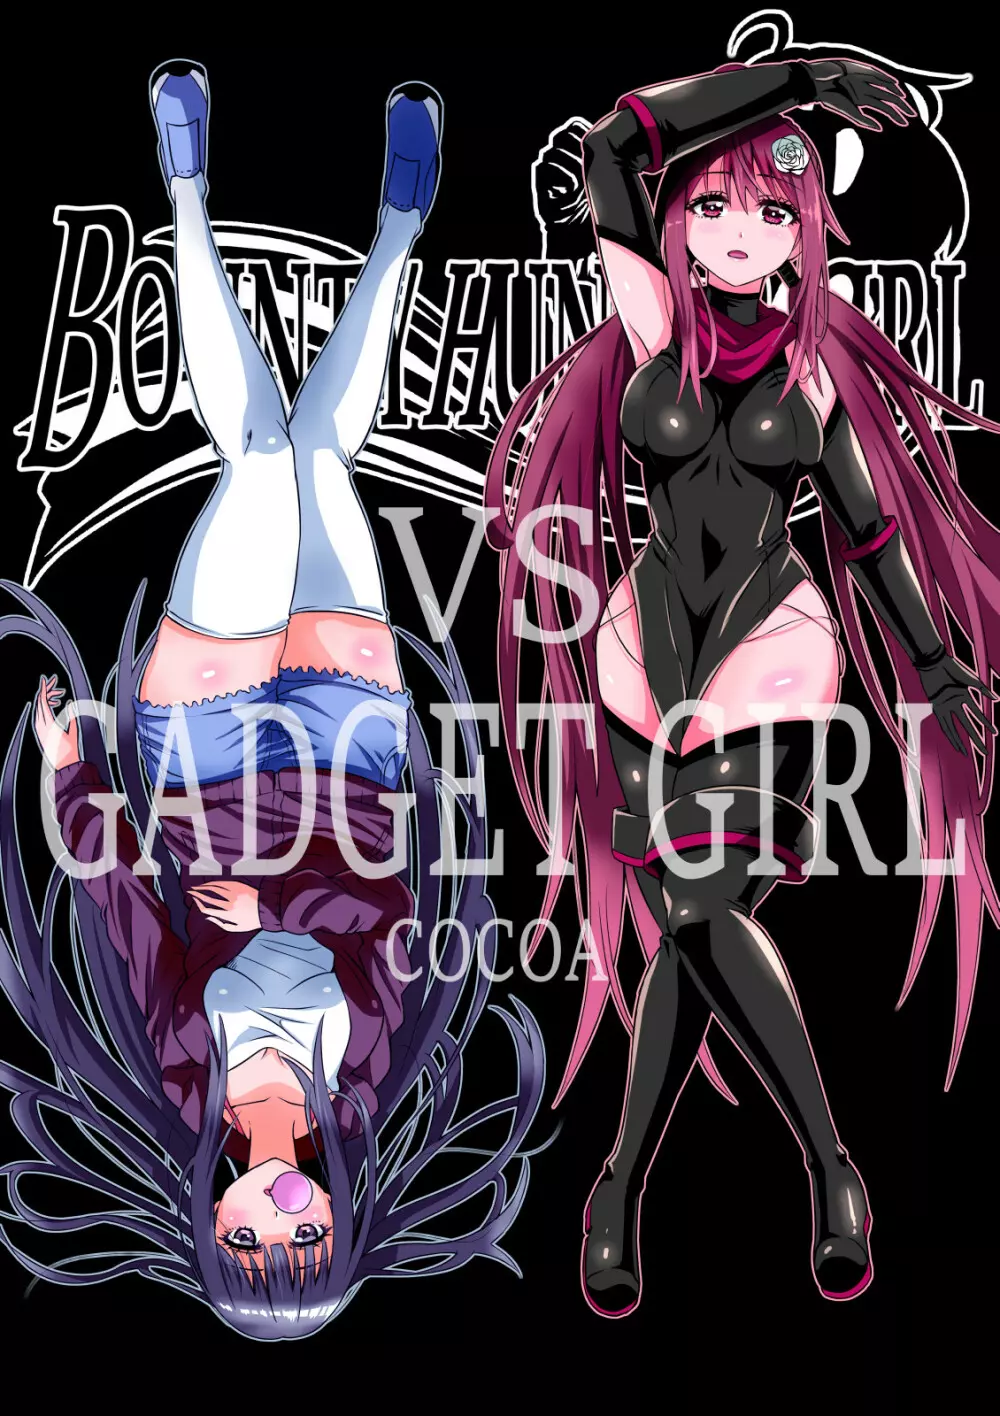 BOUNTY HUNTER GIRL vs GADGET GIRL 第22話